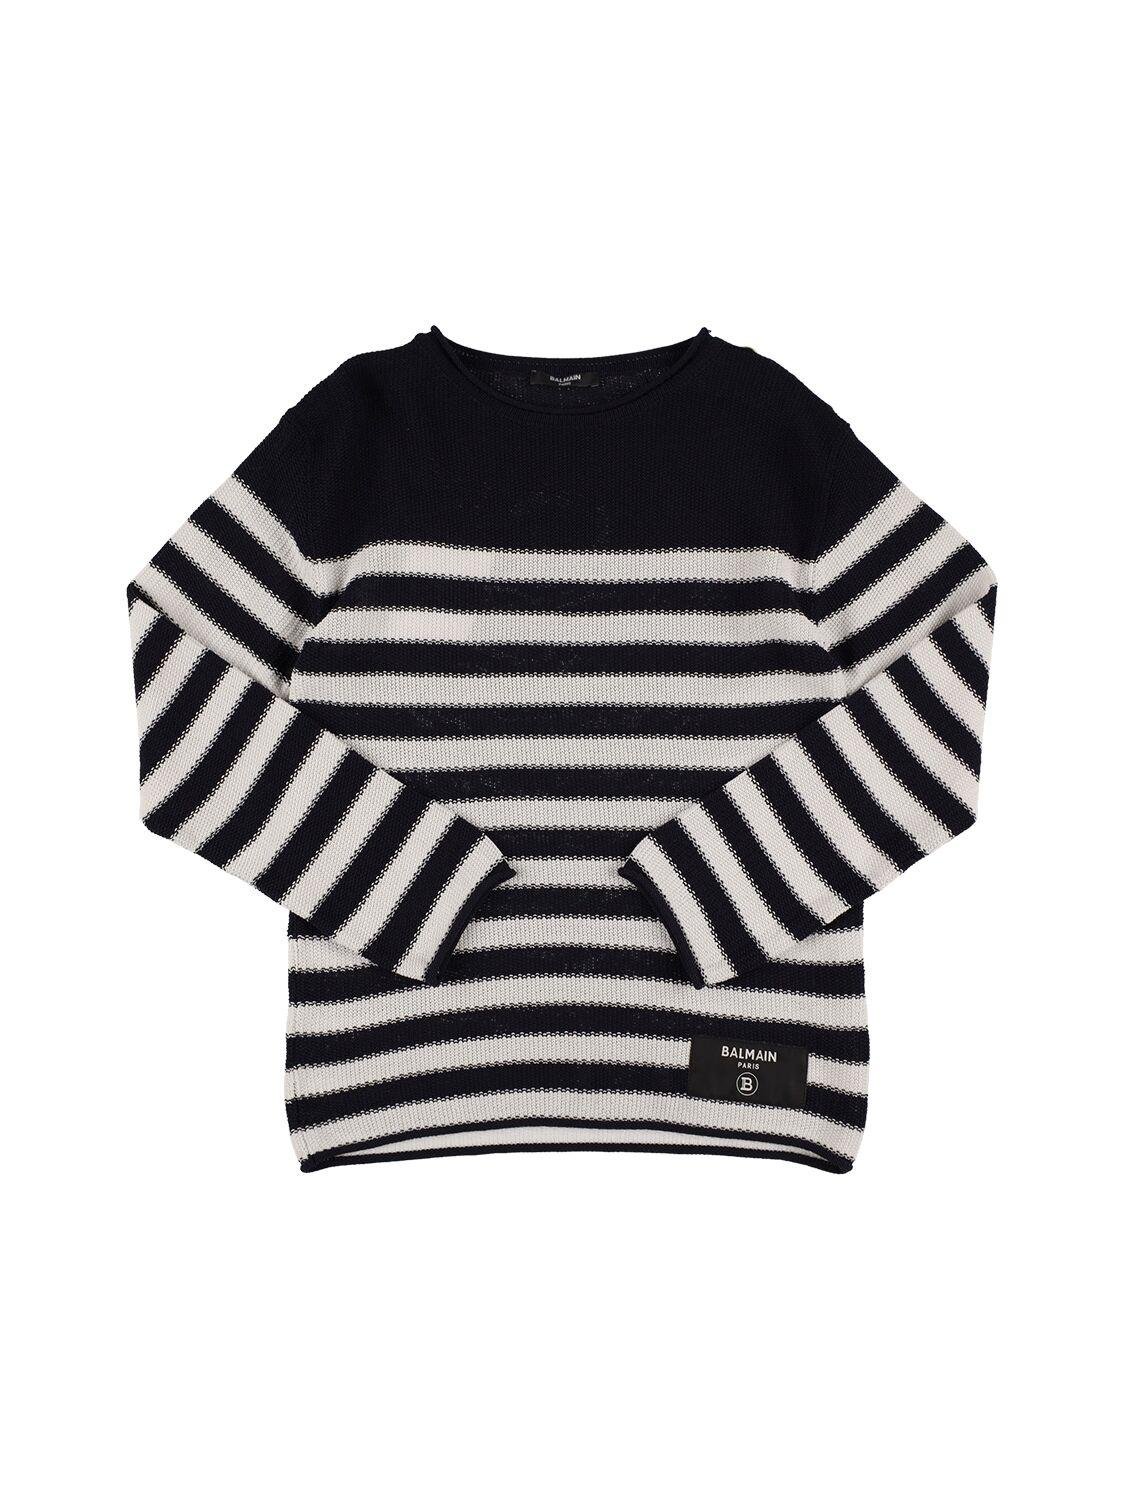 Stiped Knit Cotton Sweater by BALMAIN